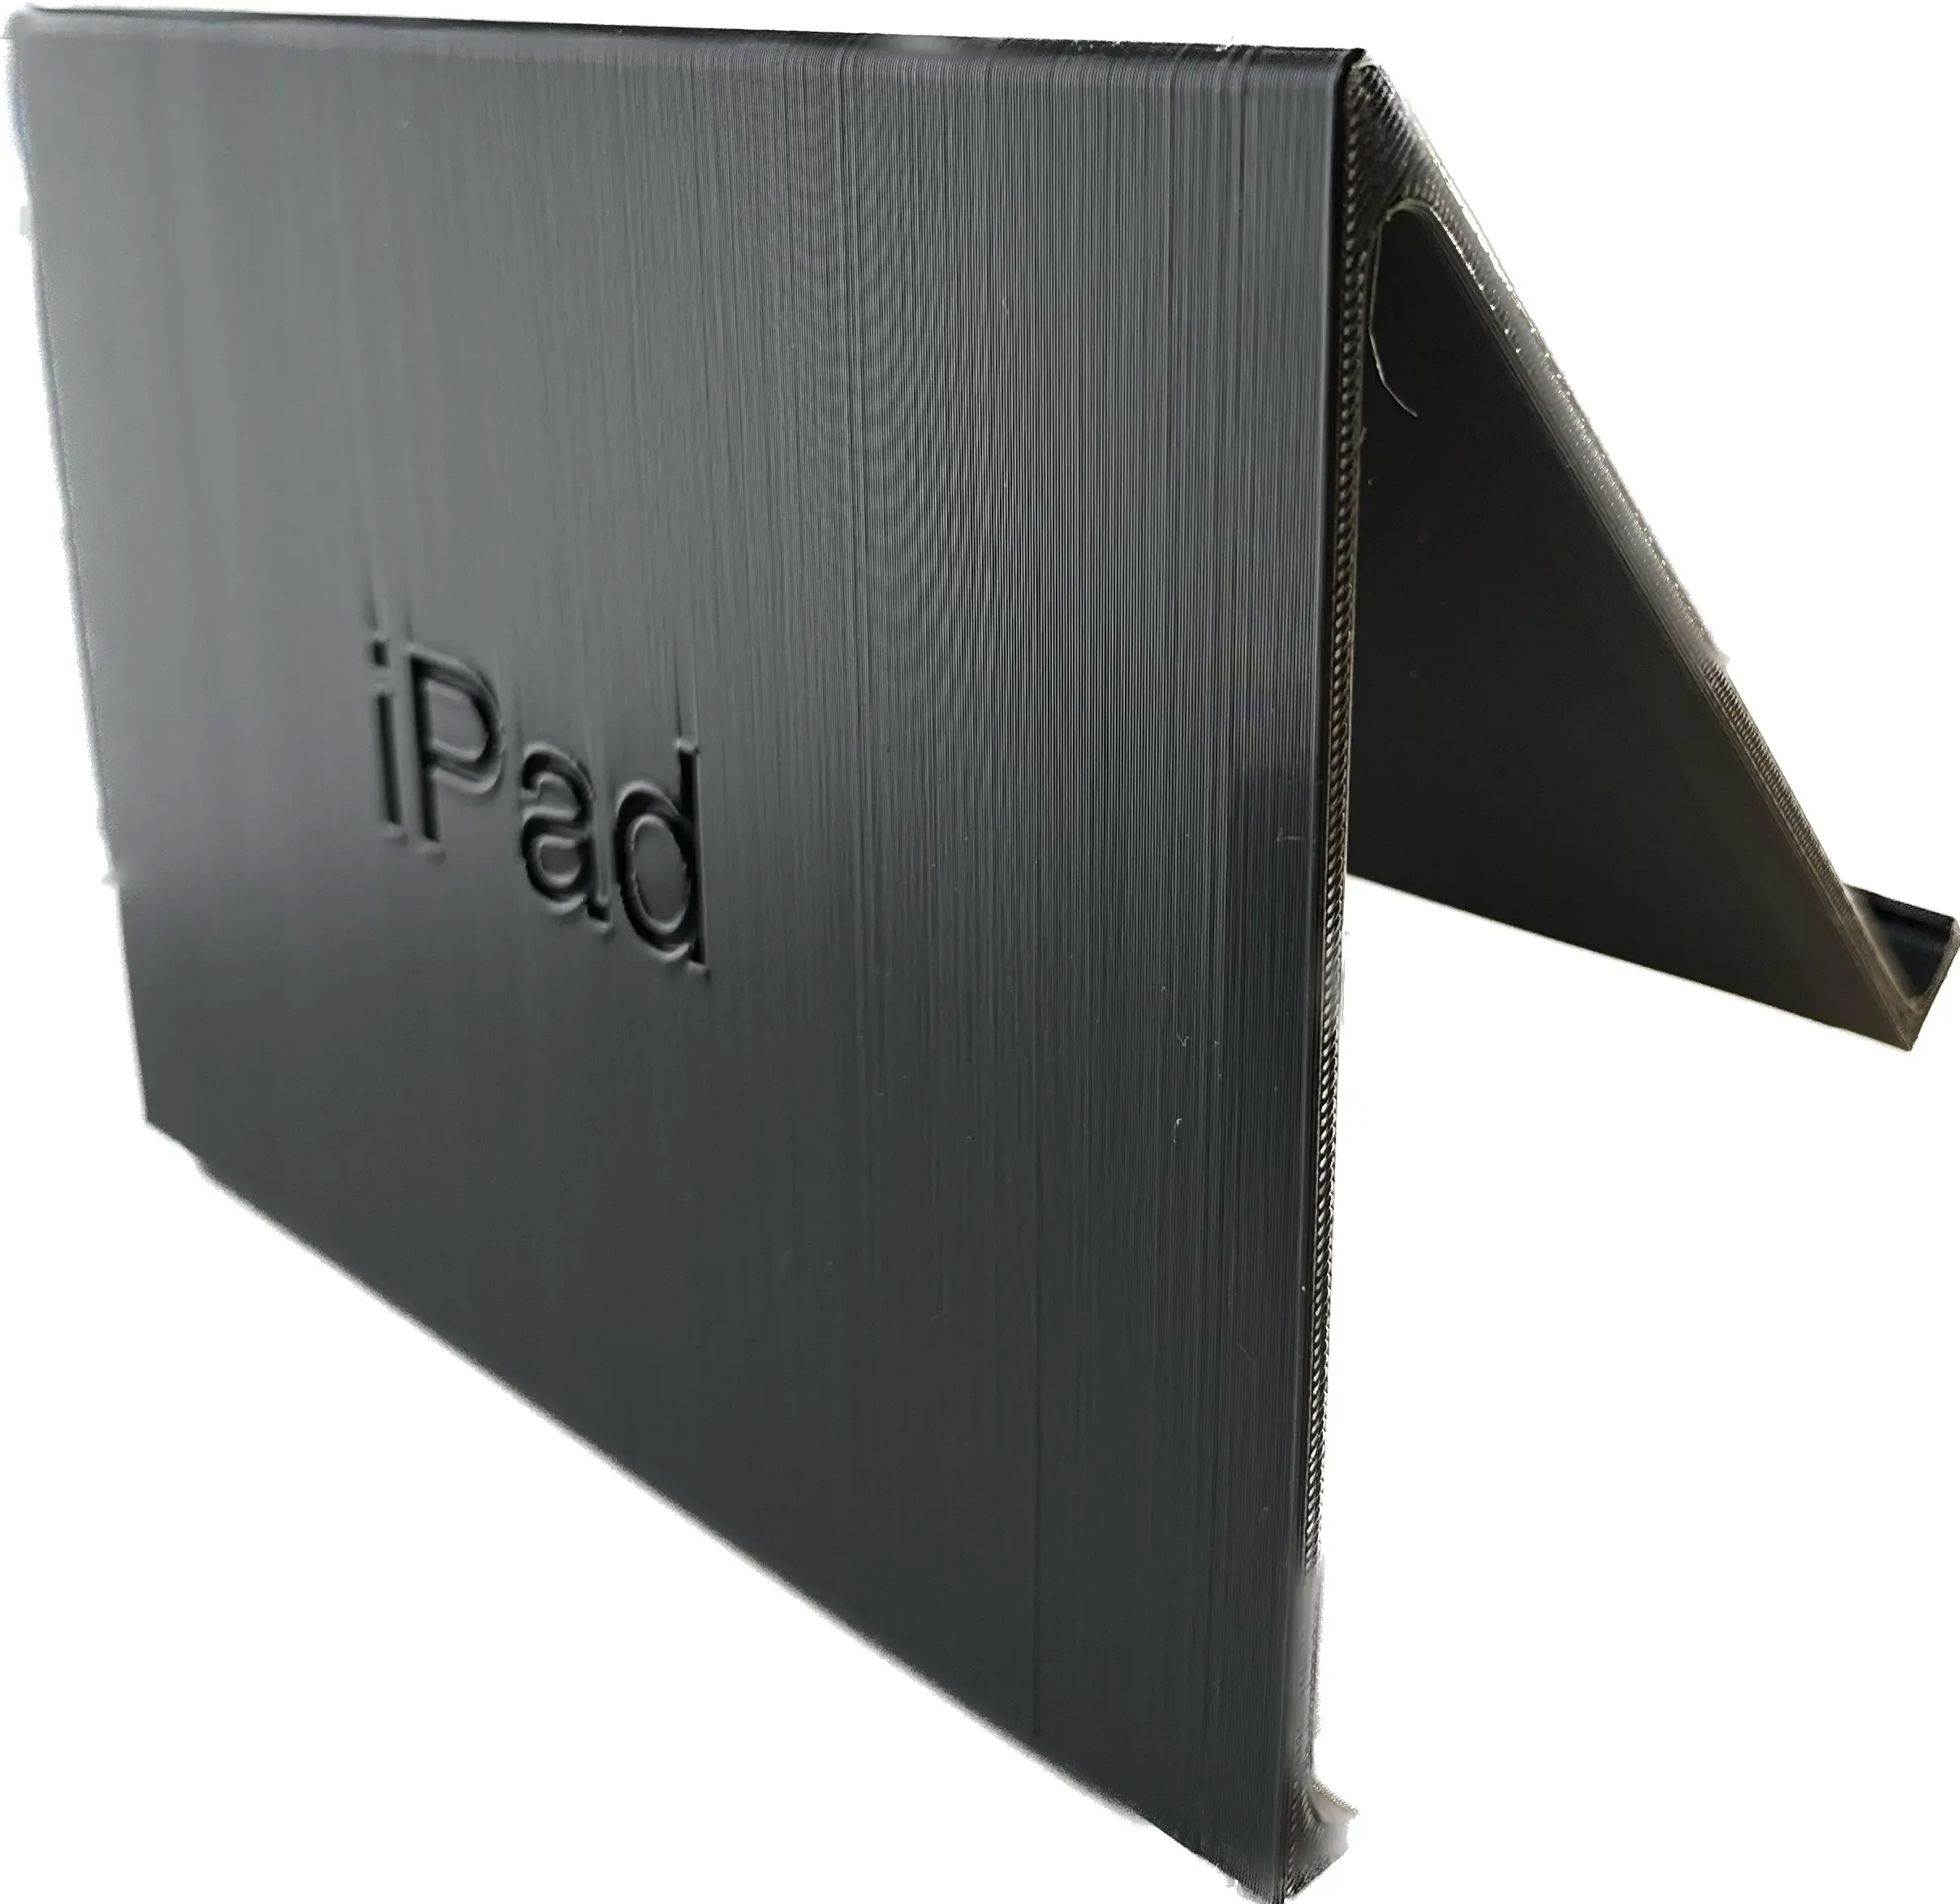 iPad desk stand